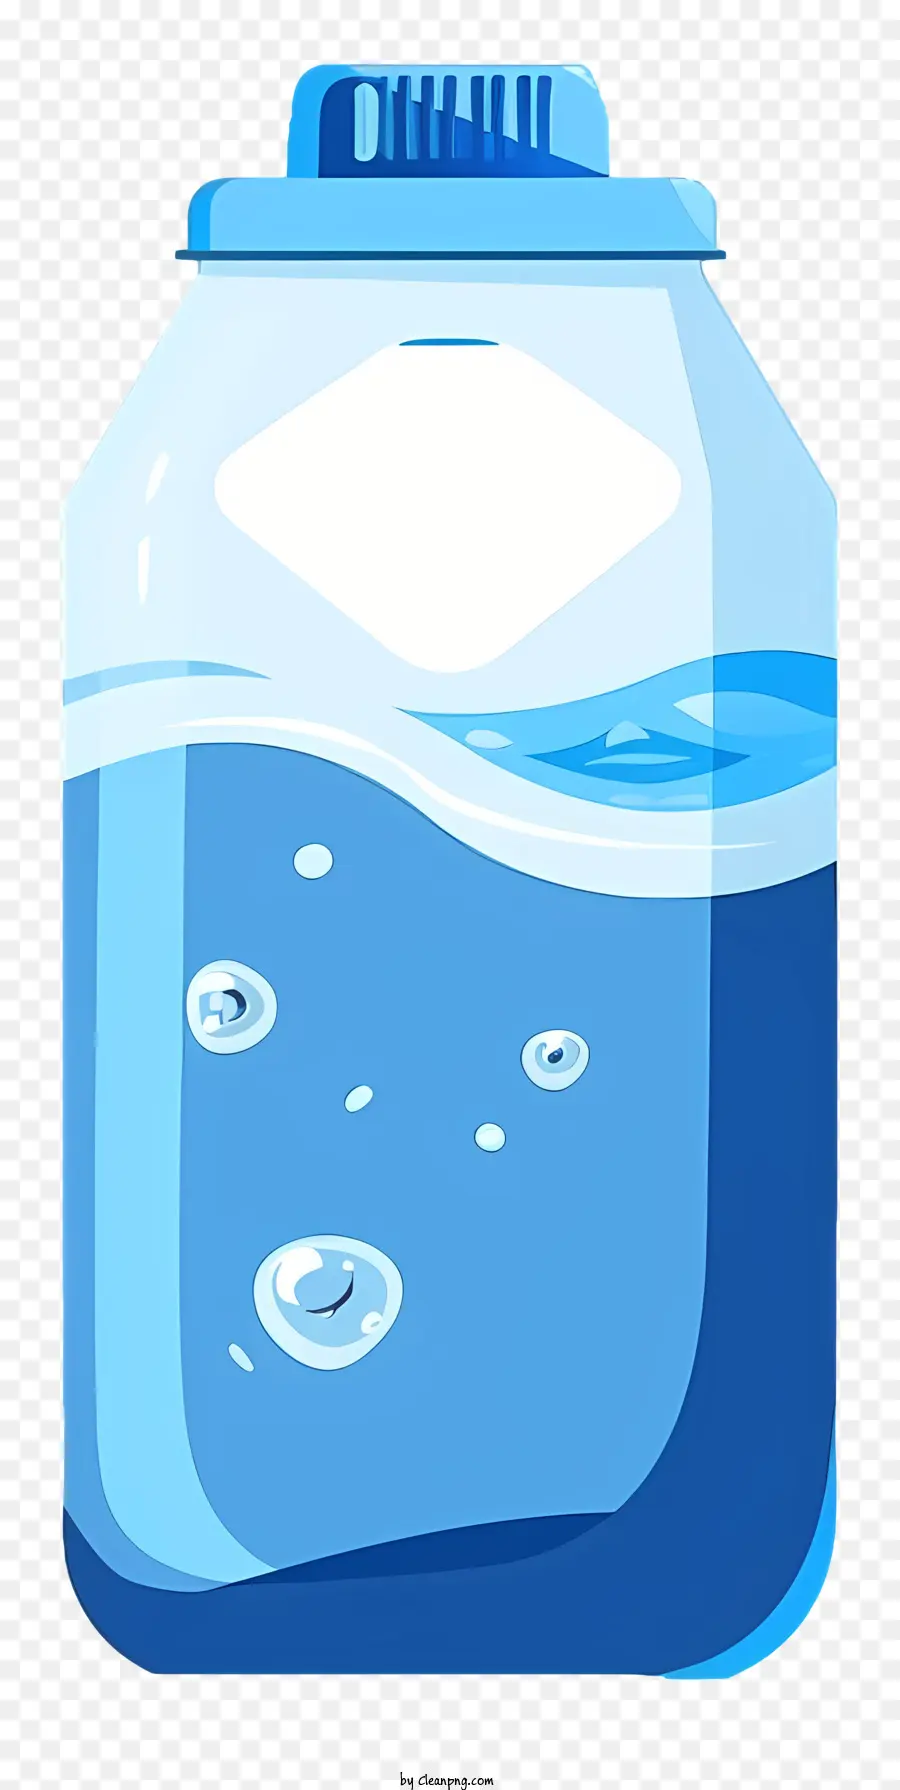 milk tetra pack glass jar clear water smooth liquid